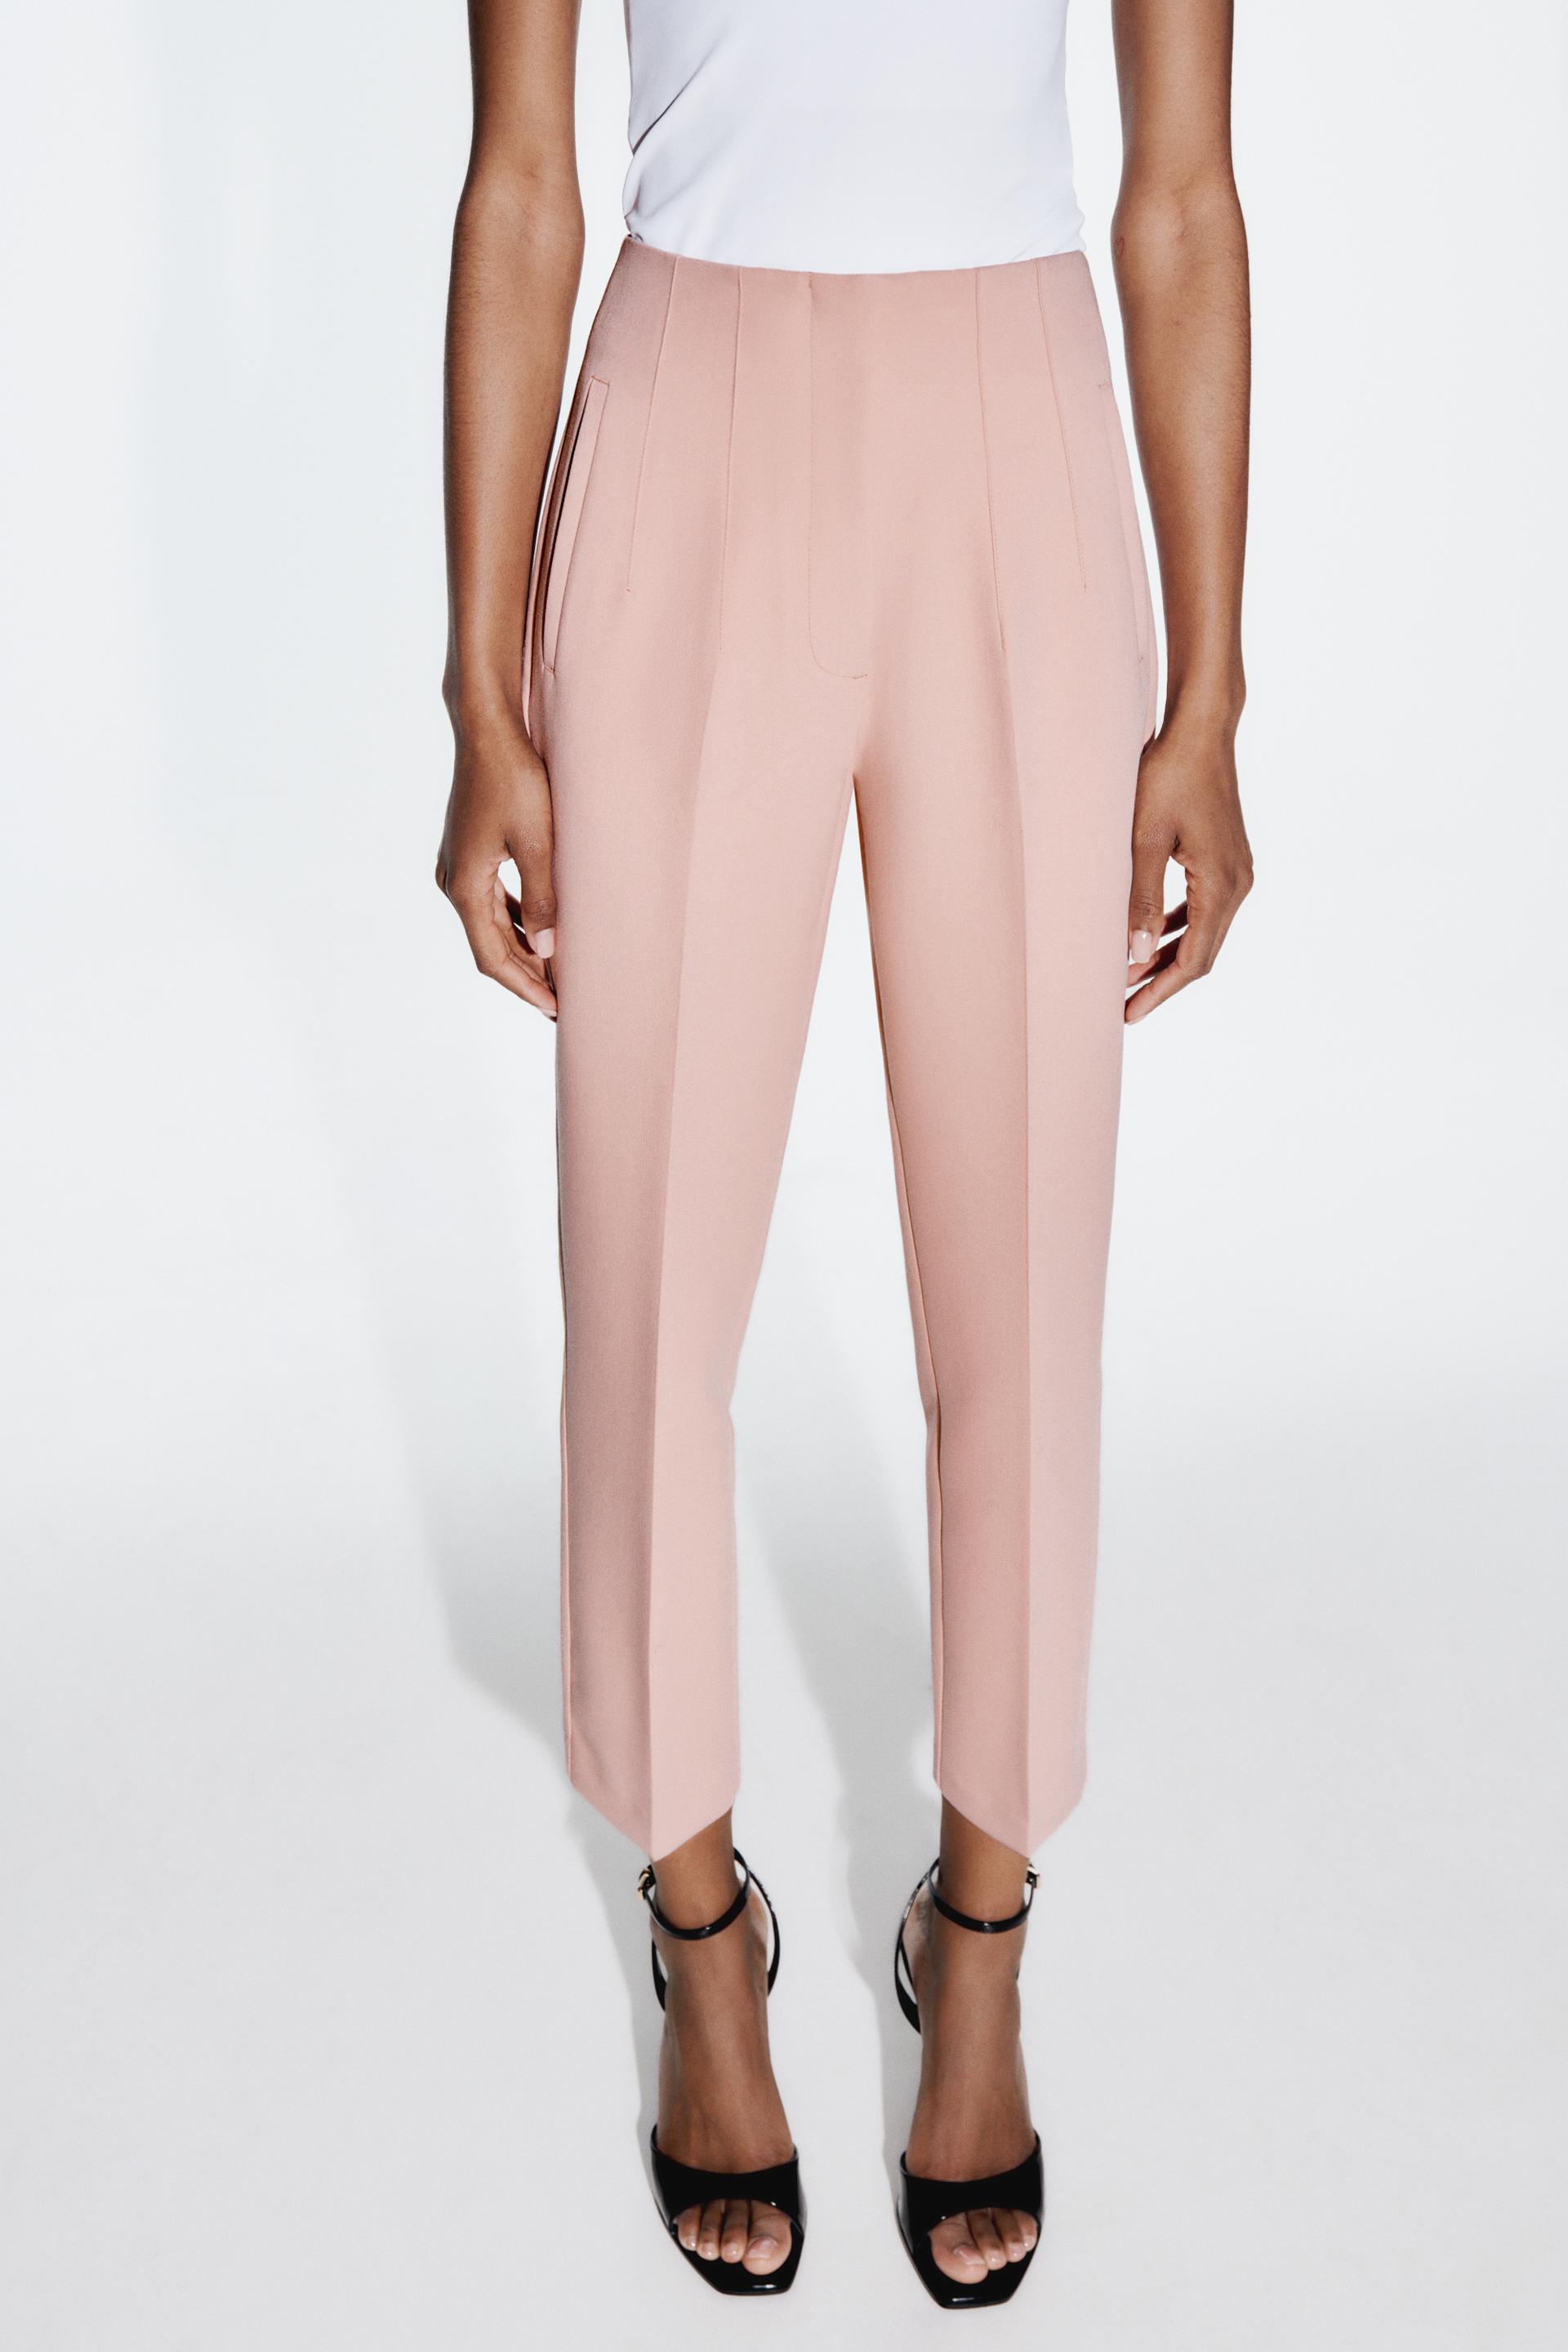 Zara high waist slim fit geometric funky print trousers